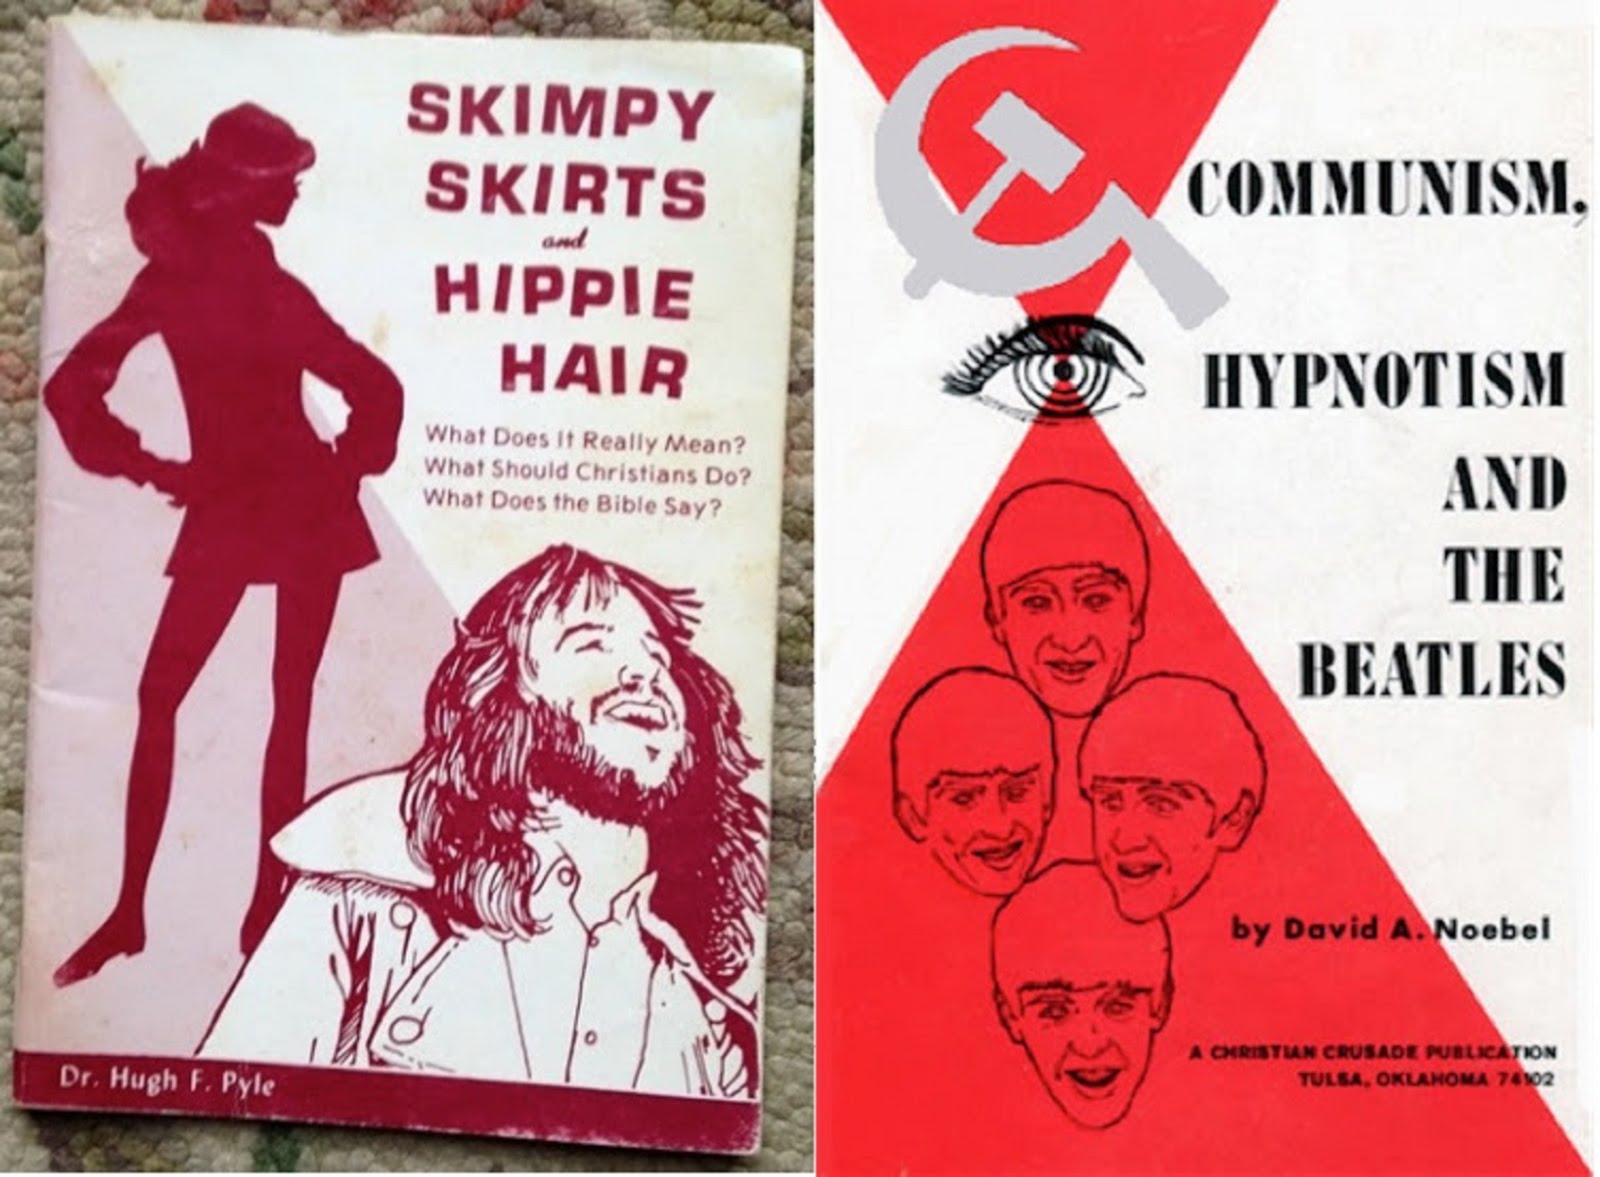 COMMUNISM, HYPNOTISM, AND THE BEATLES